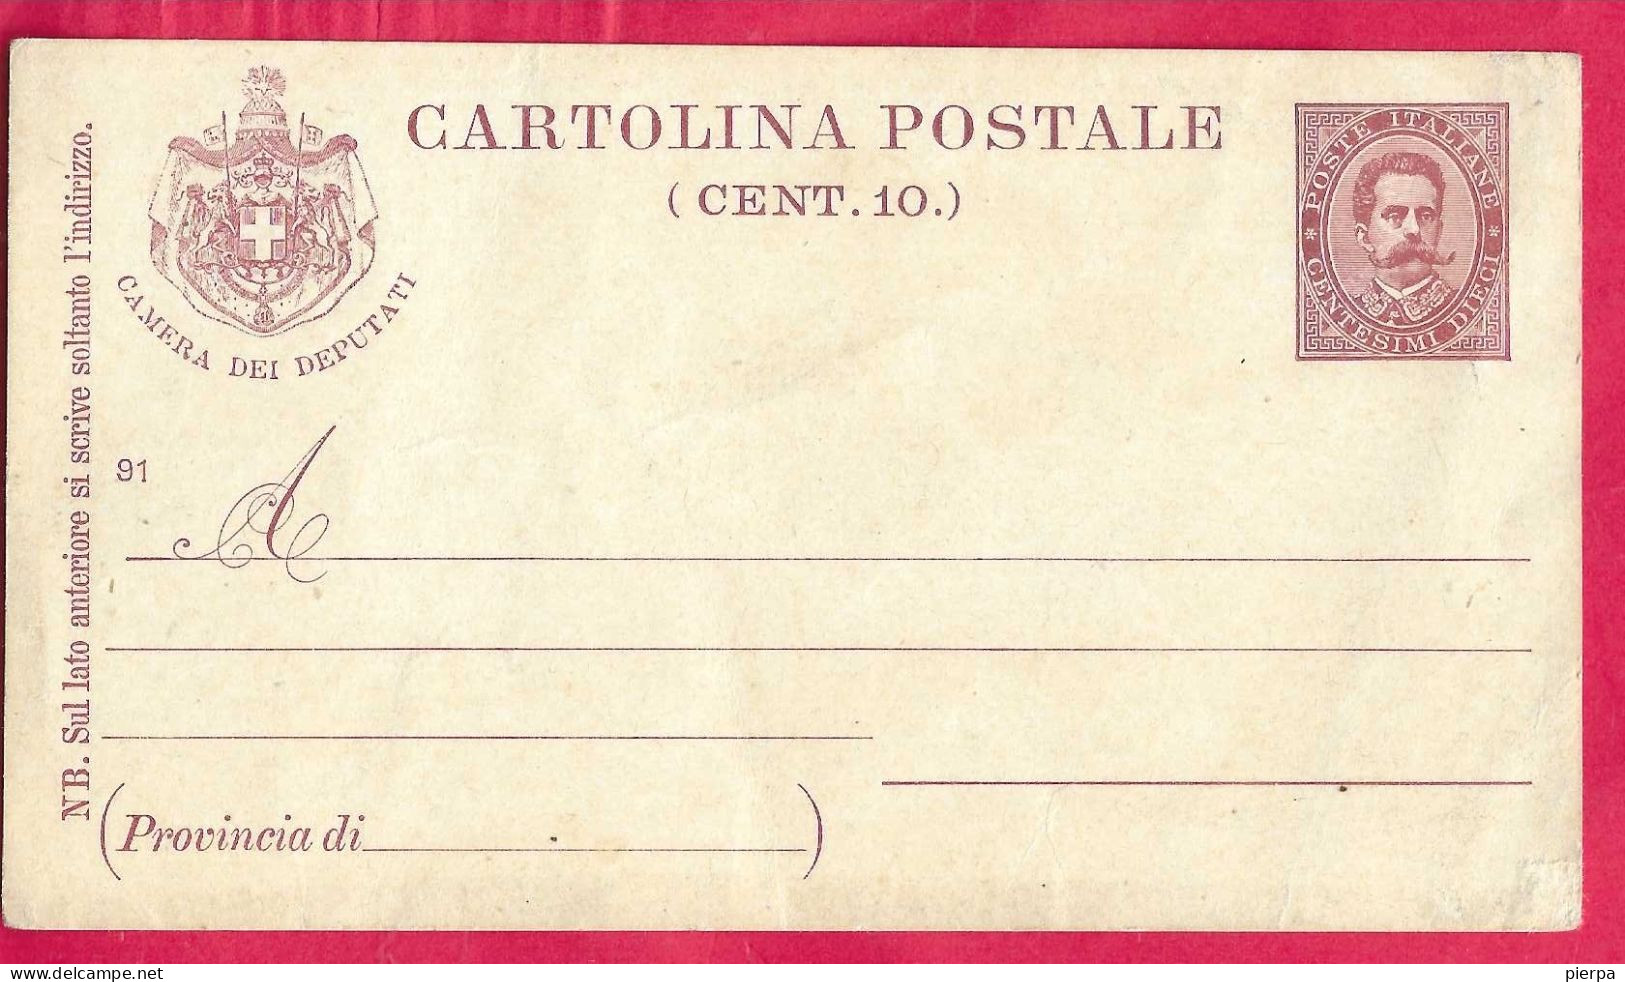 INTERO CARTOLINA POSTALE "CAMERA DEI DEPUTATI" (INT. 17B) - NUOVA - Entero Postal